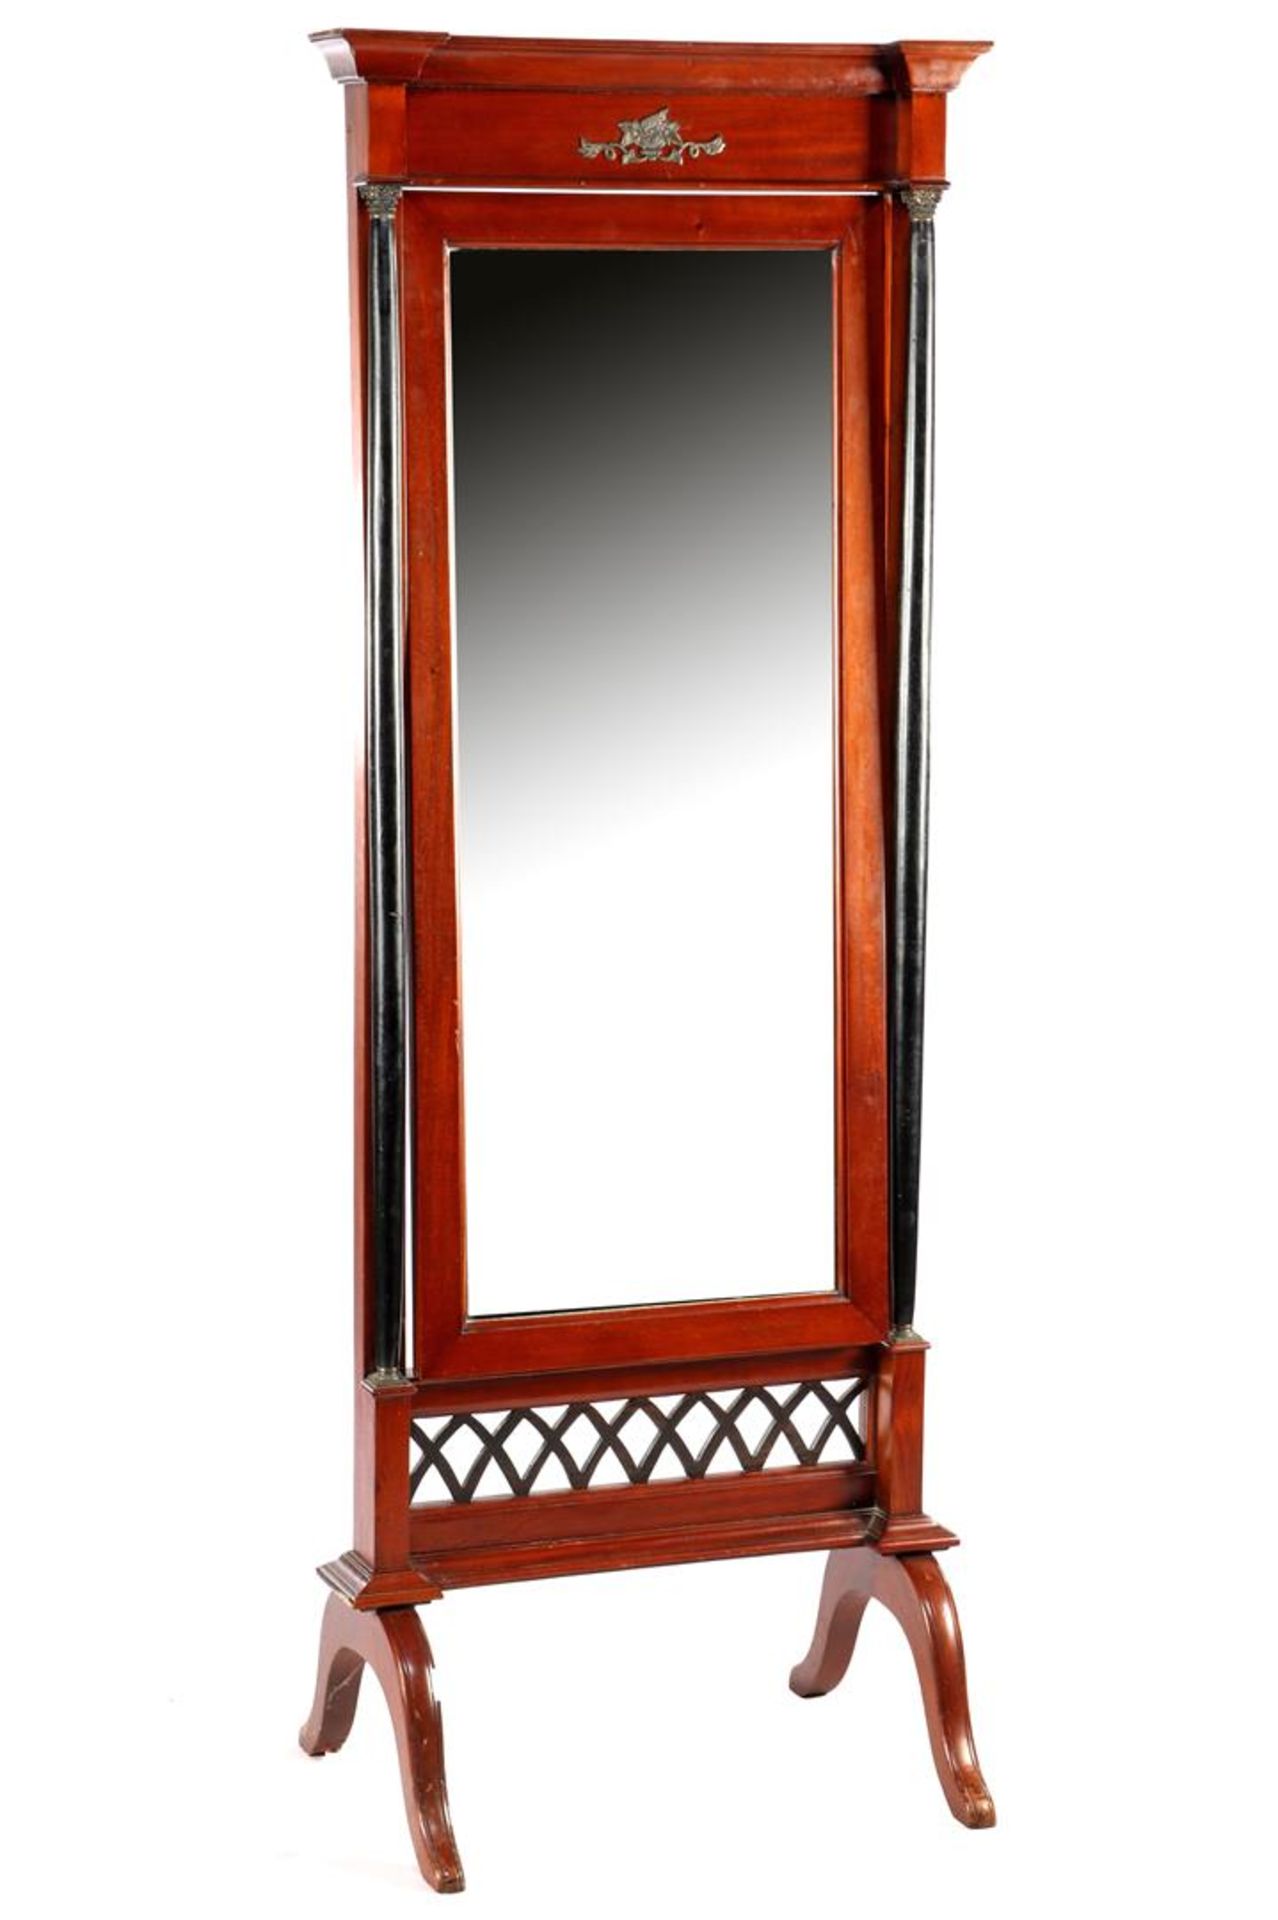 Classic full-length mirror